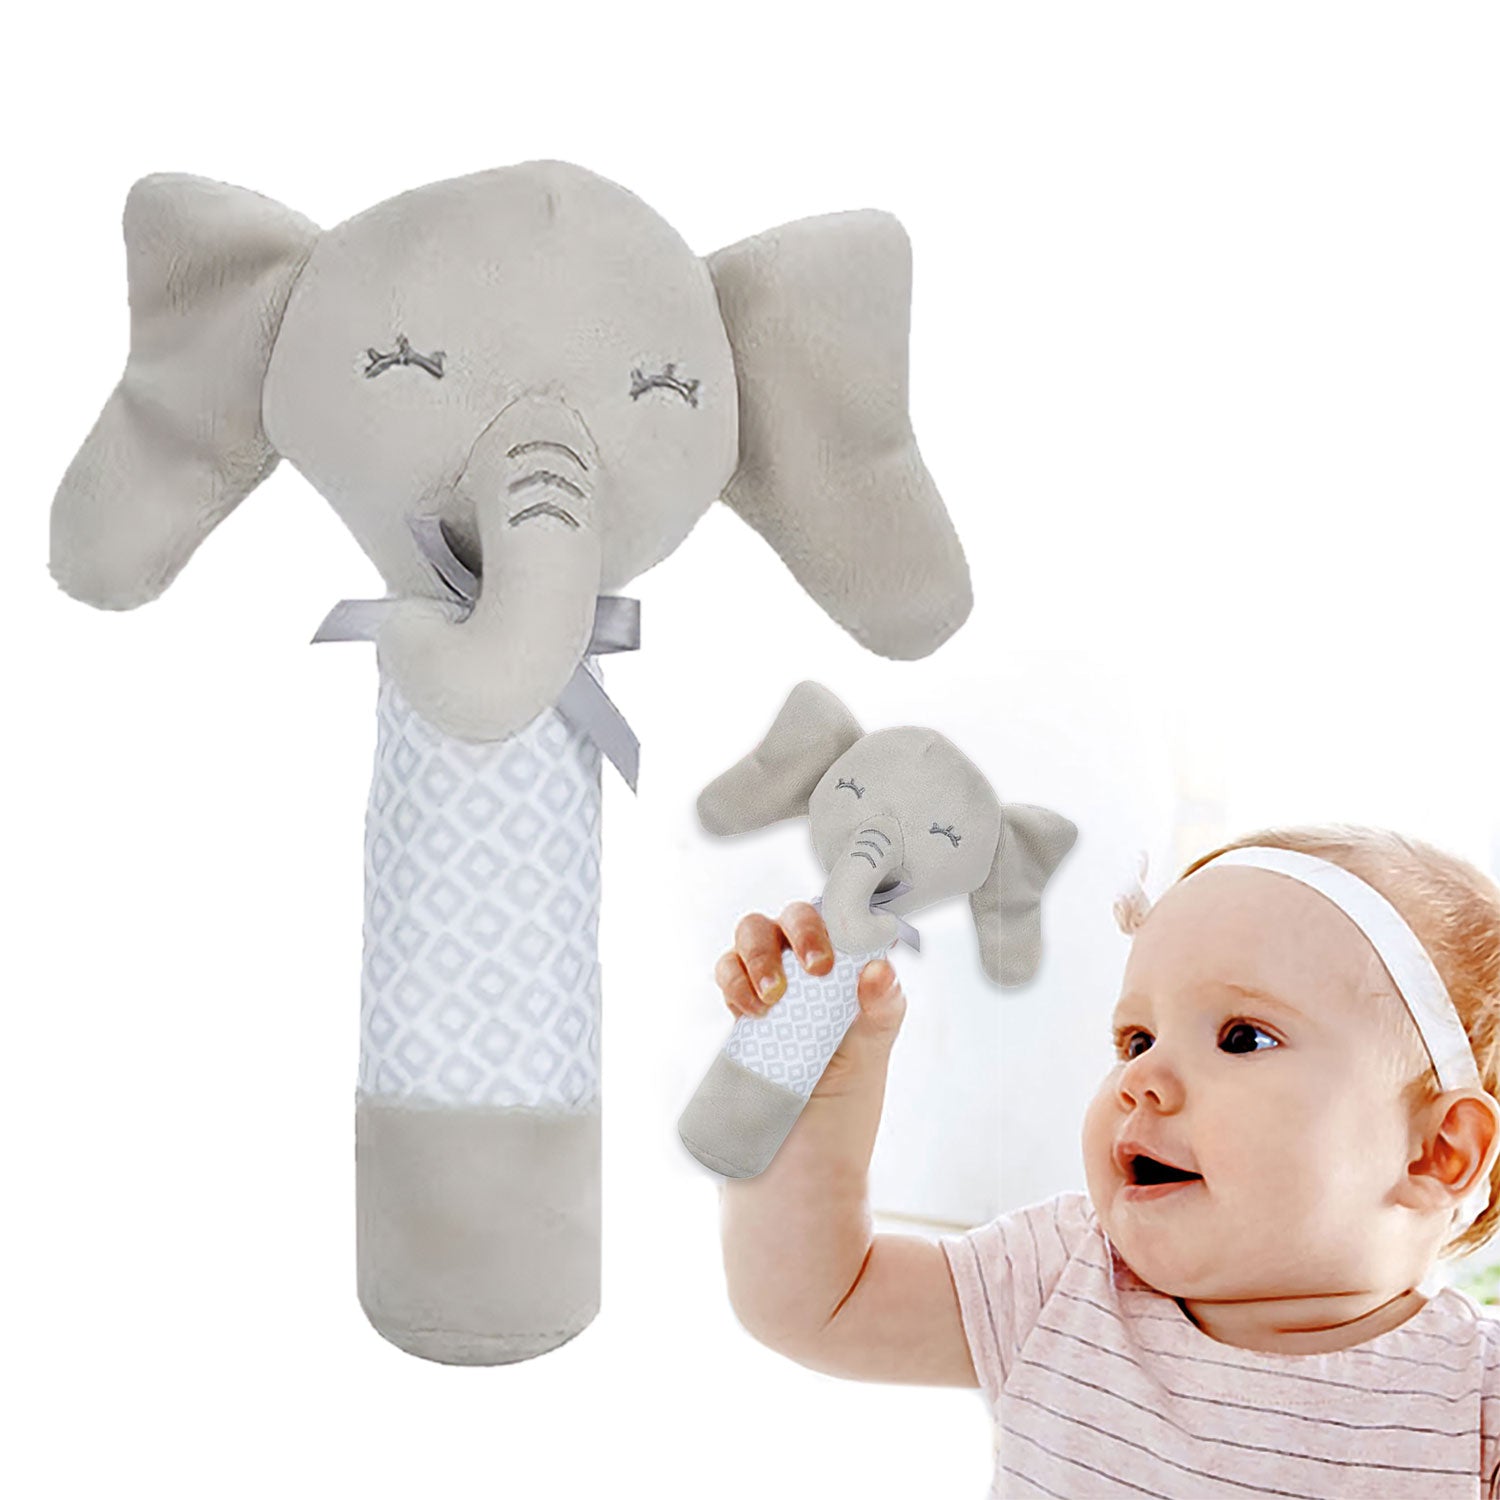 Baby Moo Sleepy Elephant Squeaker Sound Handheld Rattle Toy - Grey